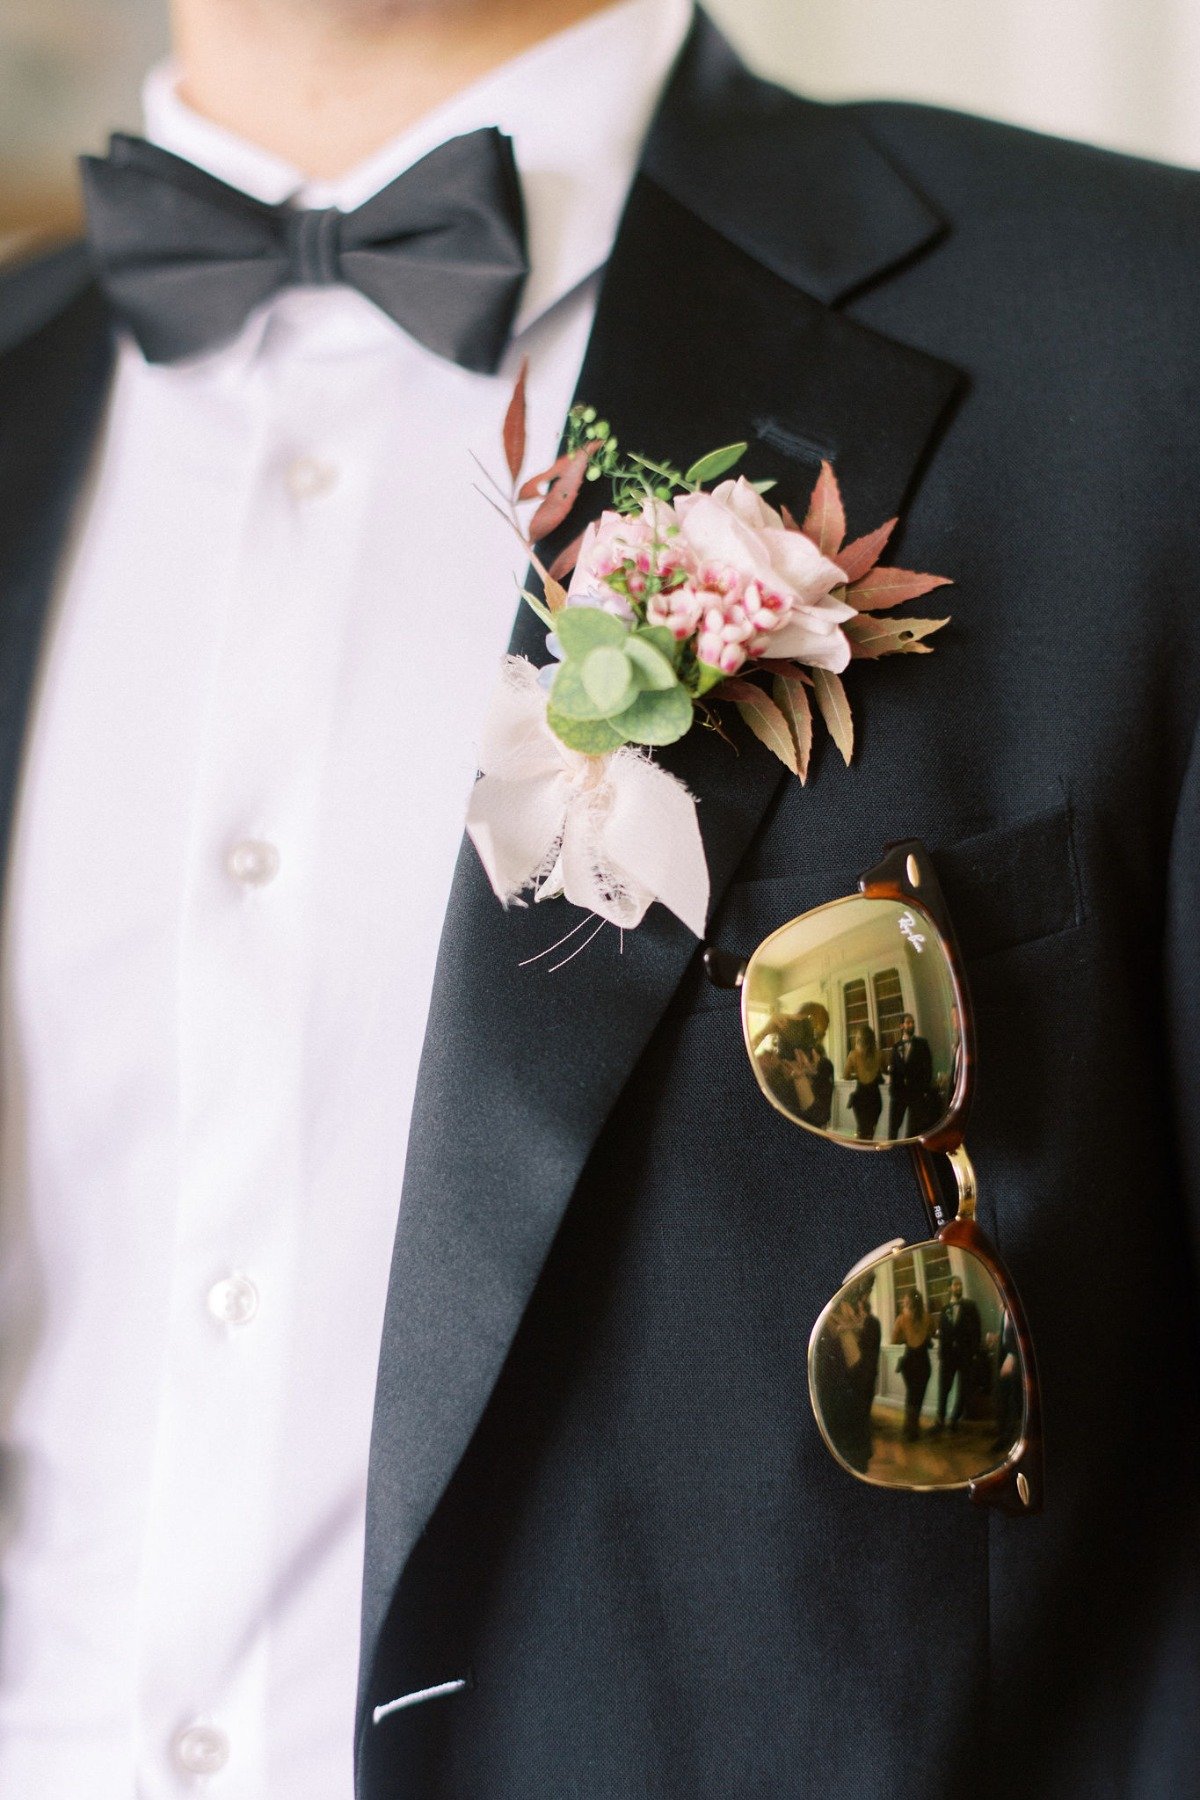 Cool groomsmen details